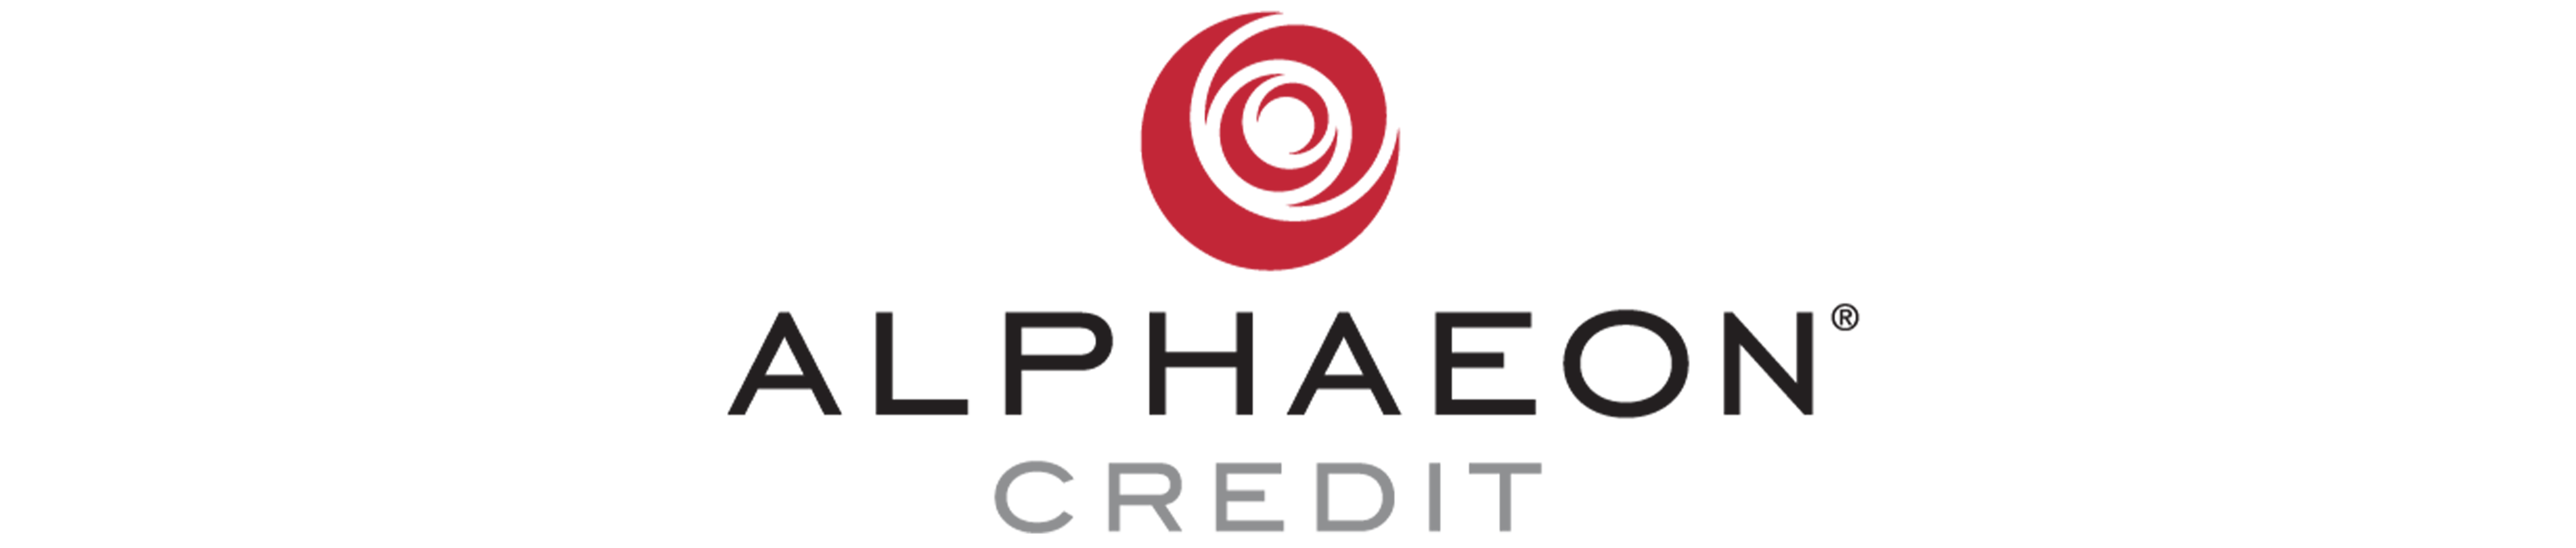 alpheon credit logo